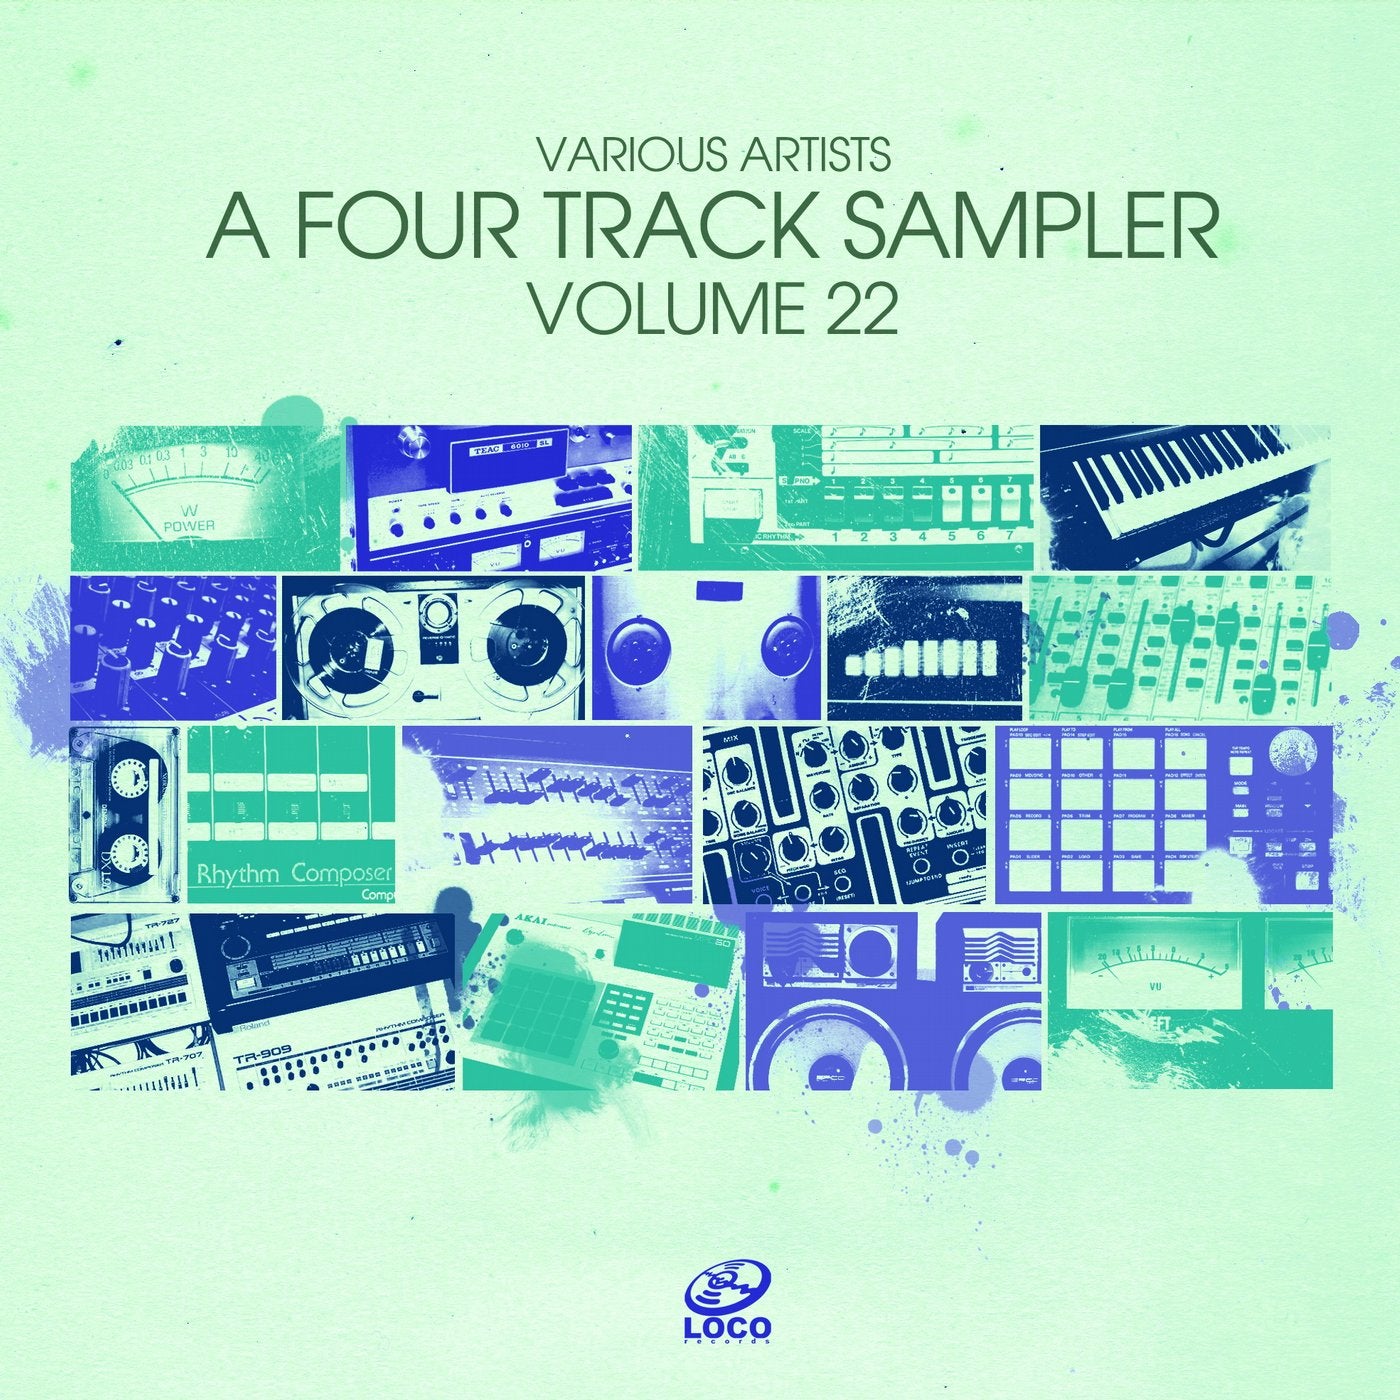 A Four Track Sampler Volume 22